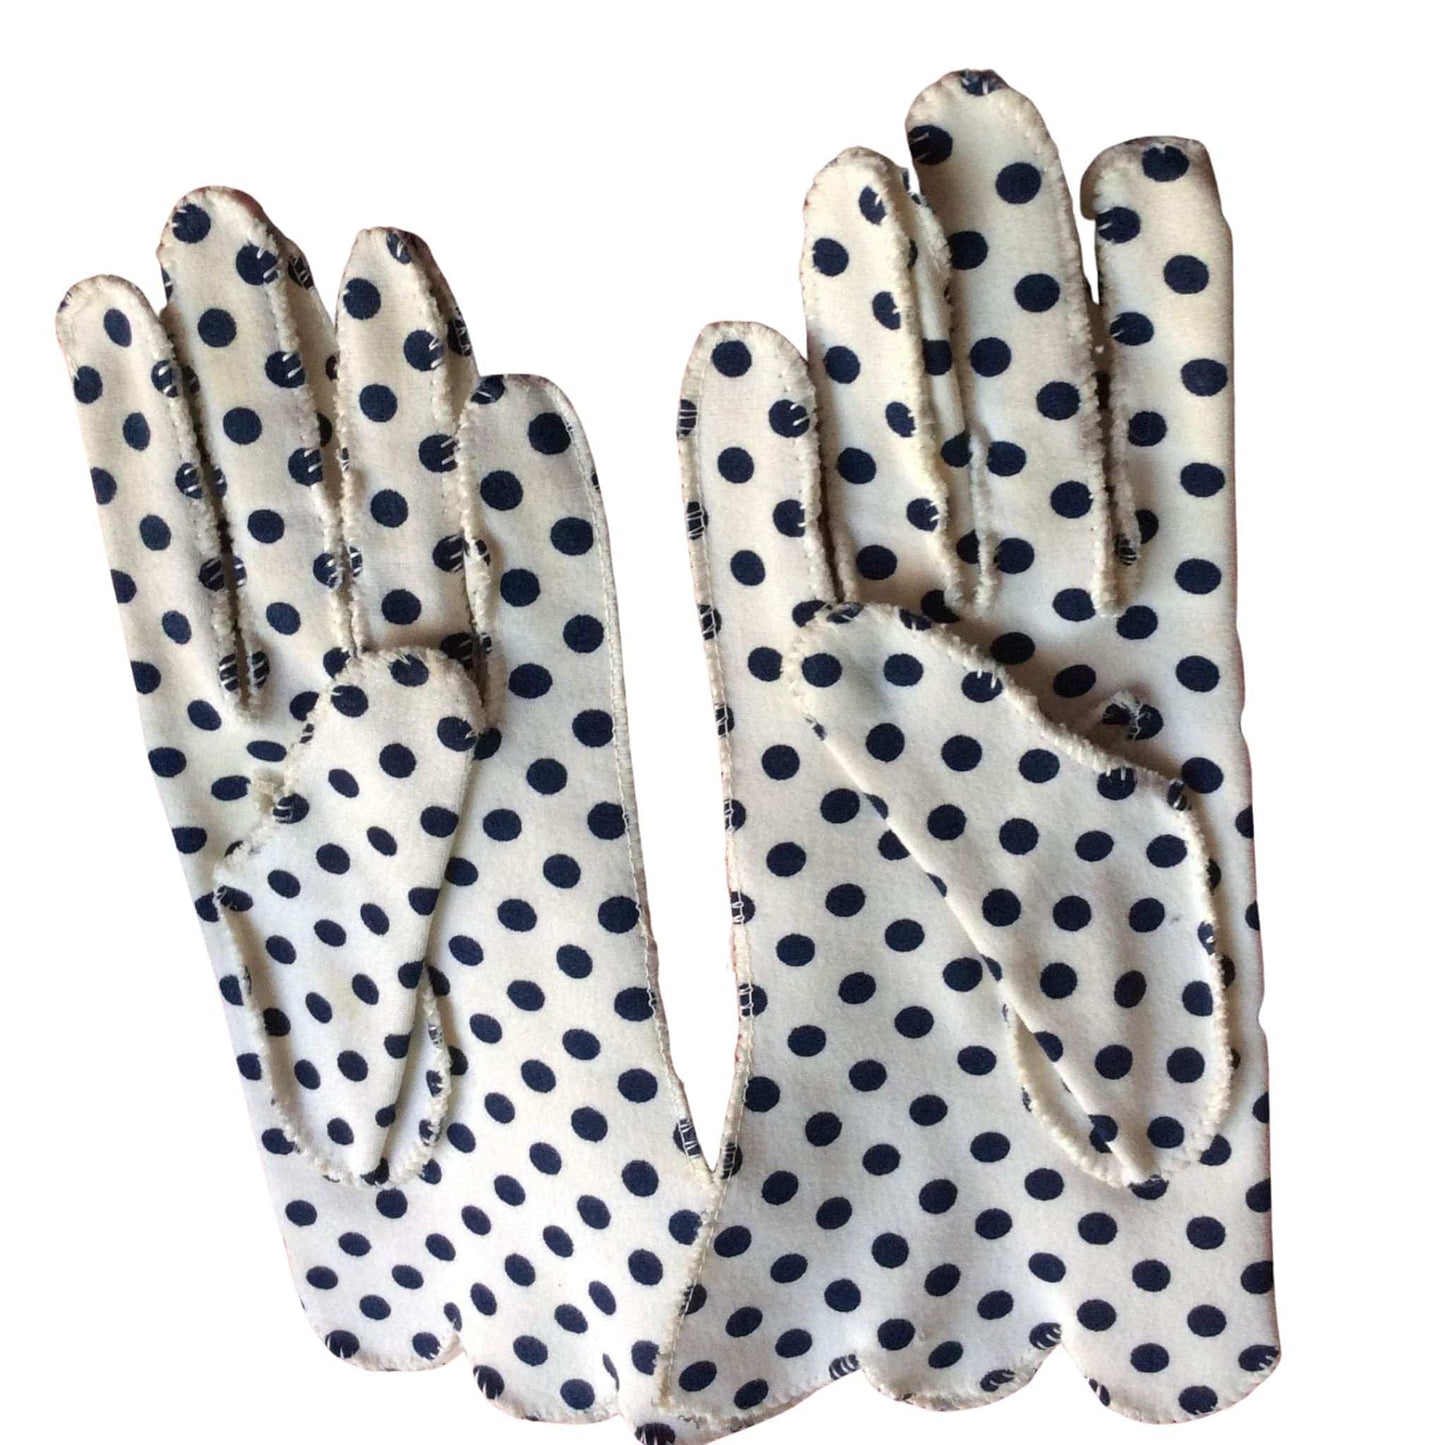 Lee Bergman Gloves B&W / Cotton / Vintage 1950s